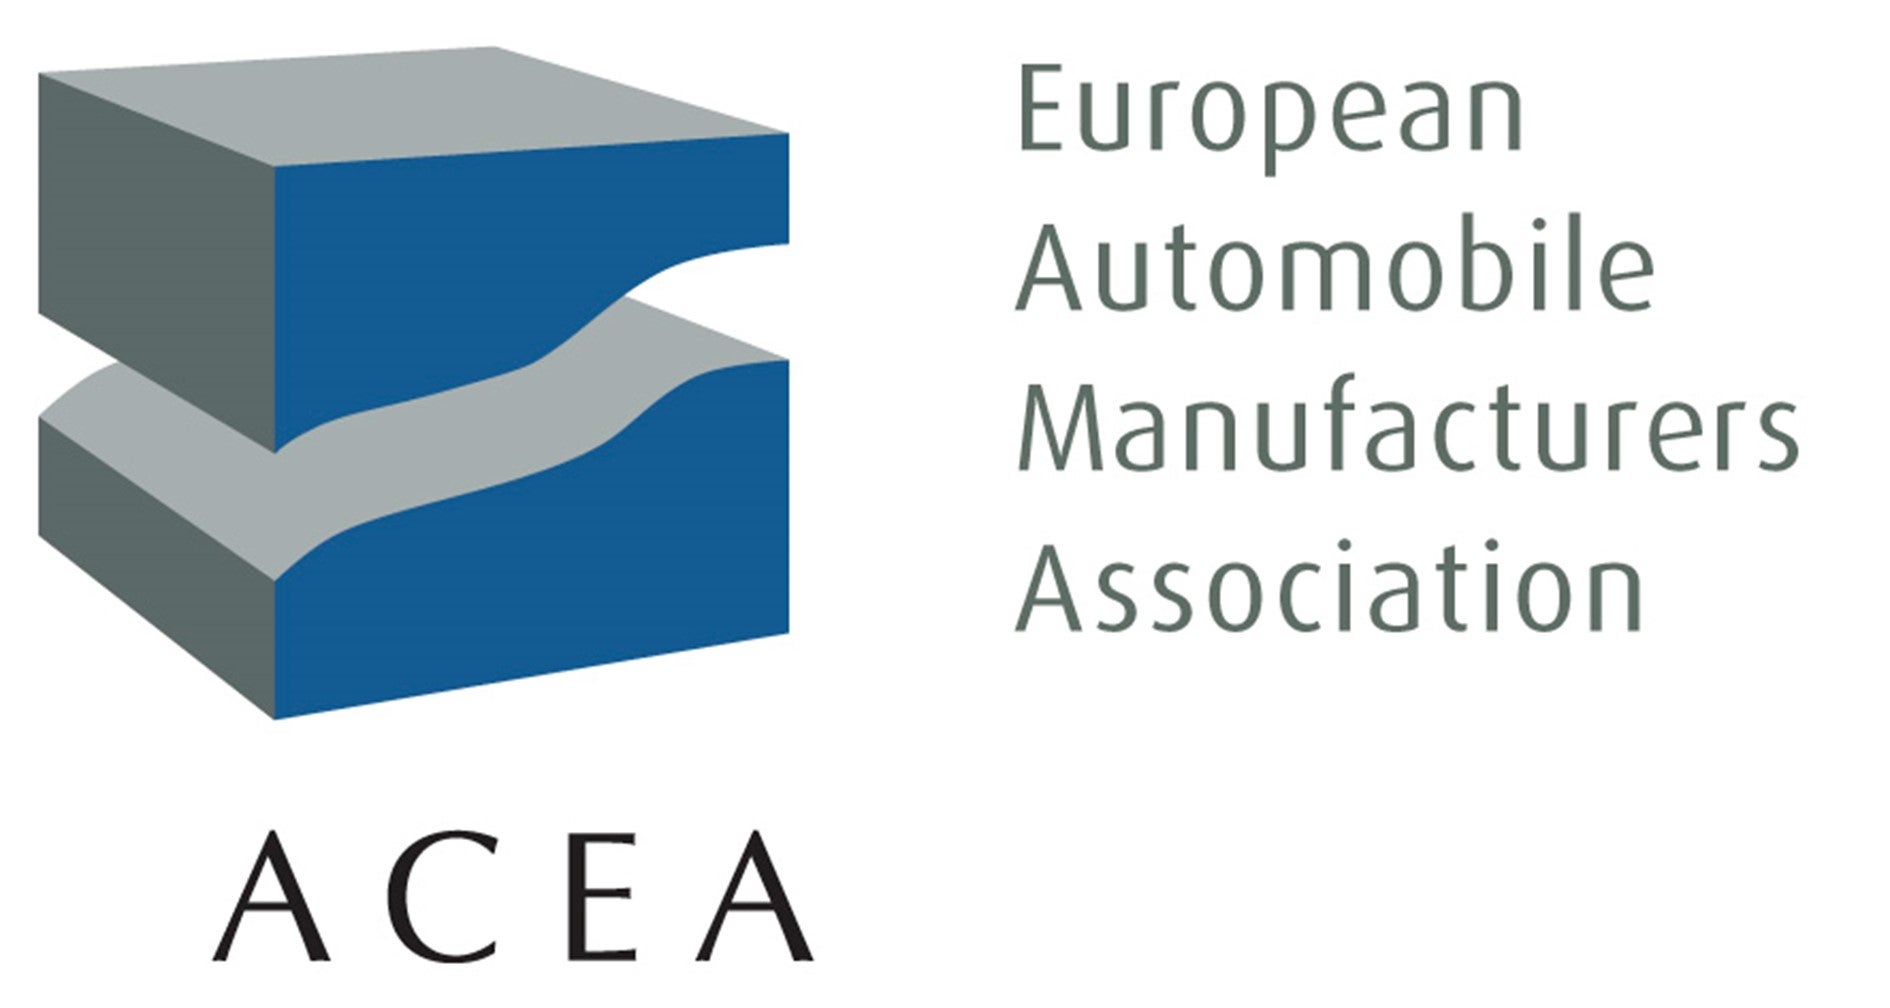 ACEA, European Autombile Manufacturers Association